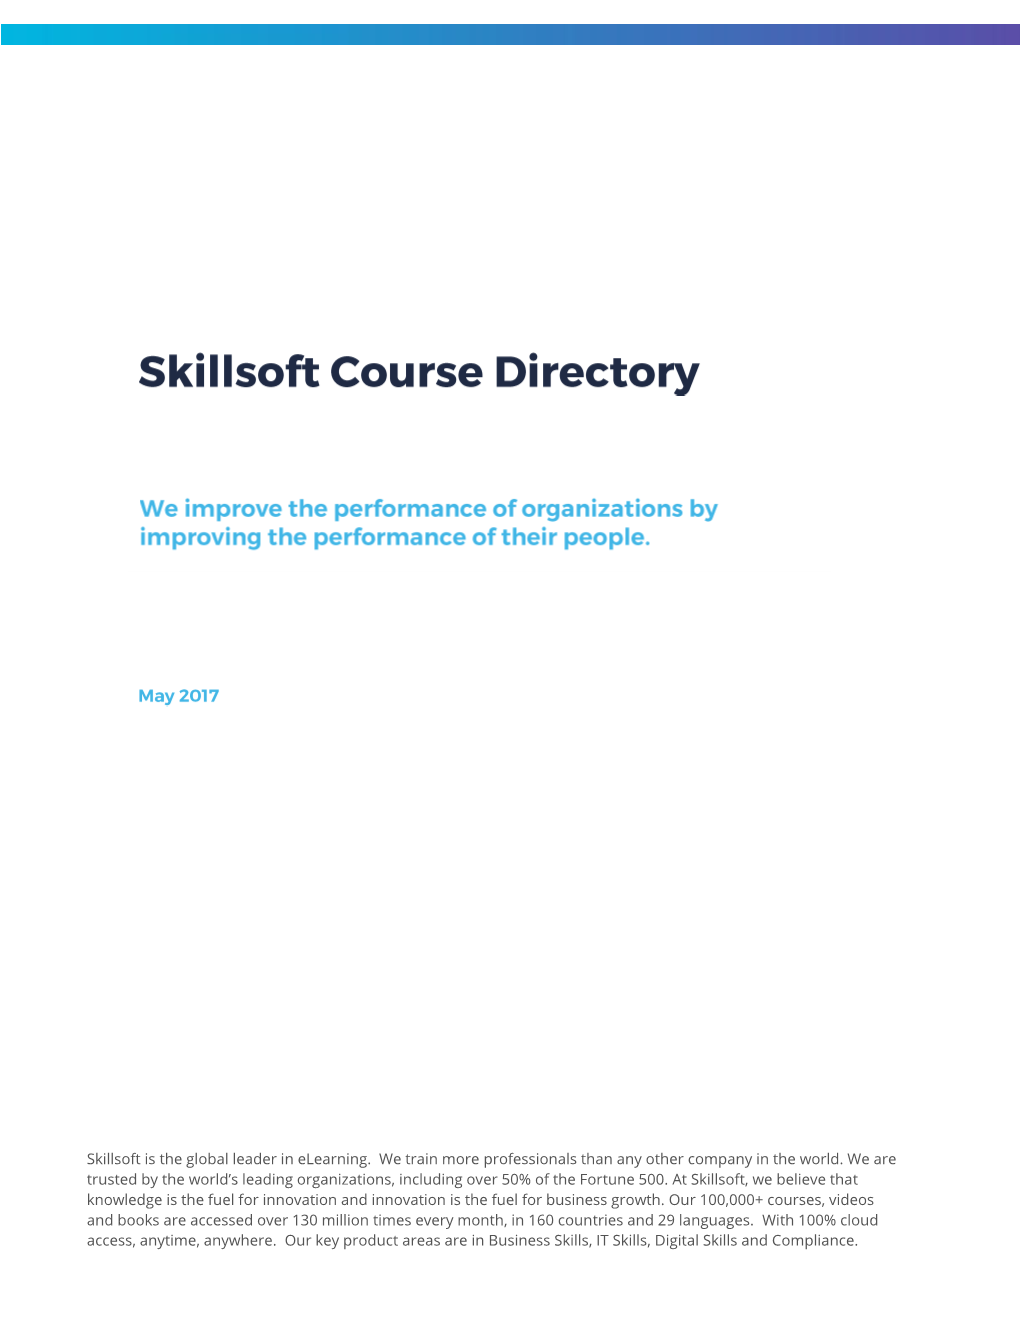 Skillsoft Course Catalog (Pdf)